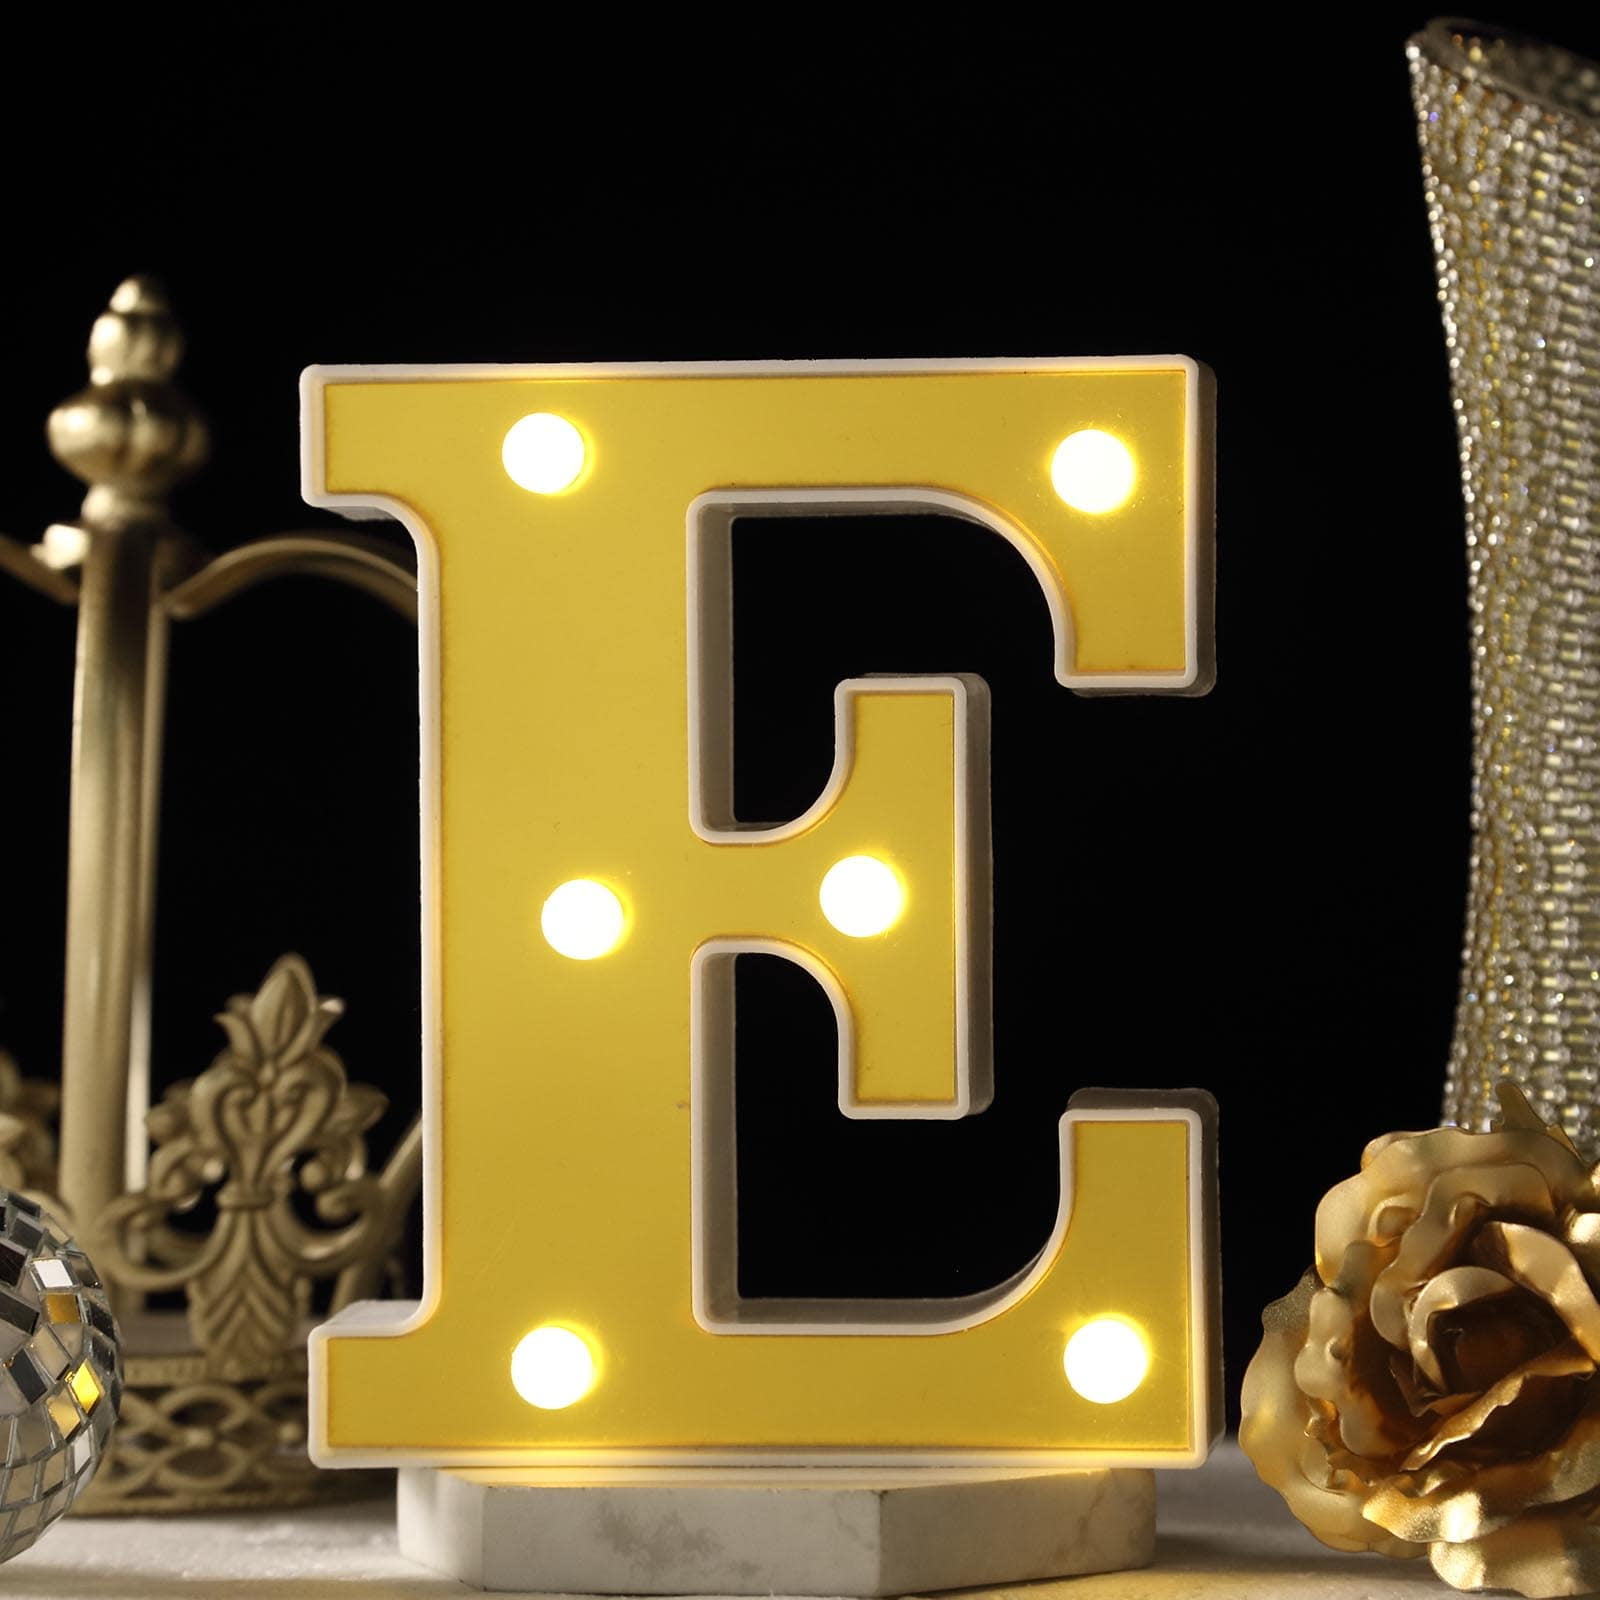 Efavormart 6" 3D Gold Marquee Letters 5 LED Light Letters Warm White Letter Lights - E - Walmart.com